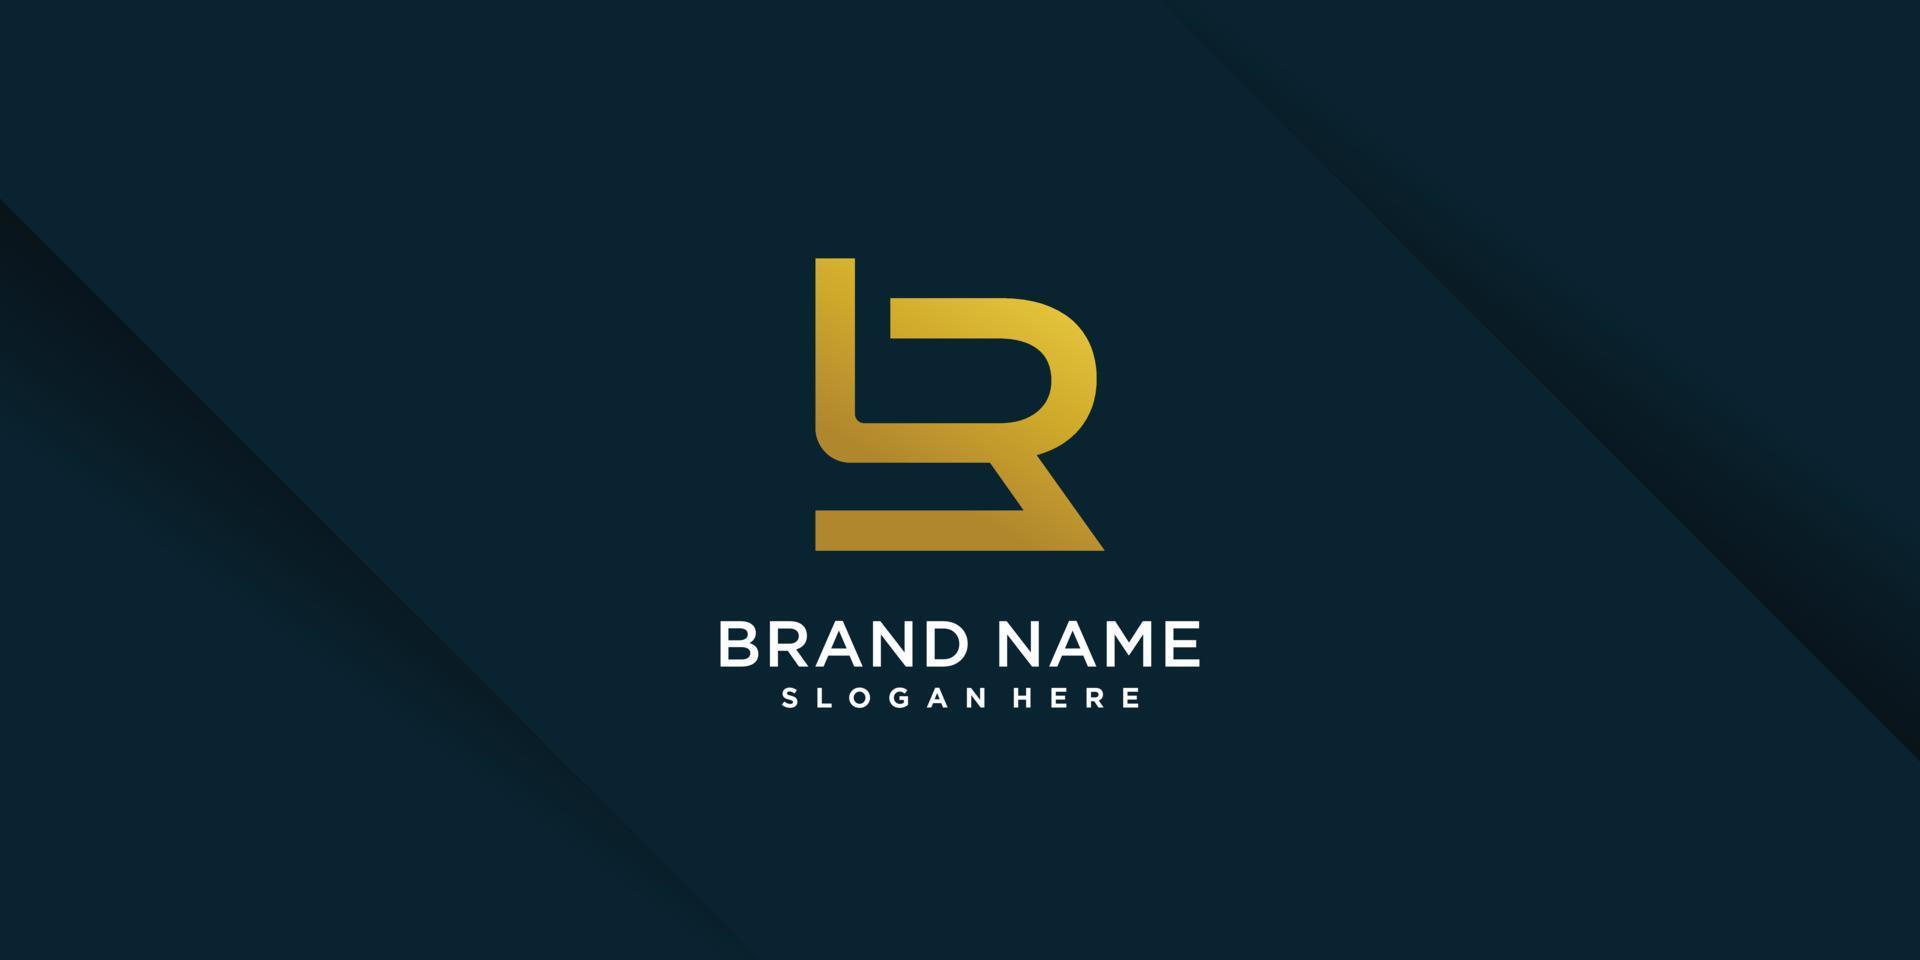 R logo with creative element style Premium Vector part 7